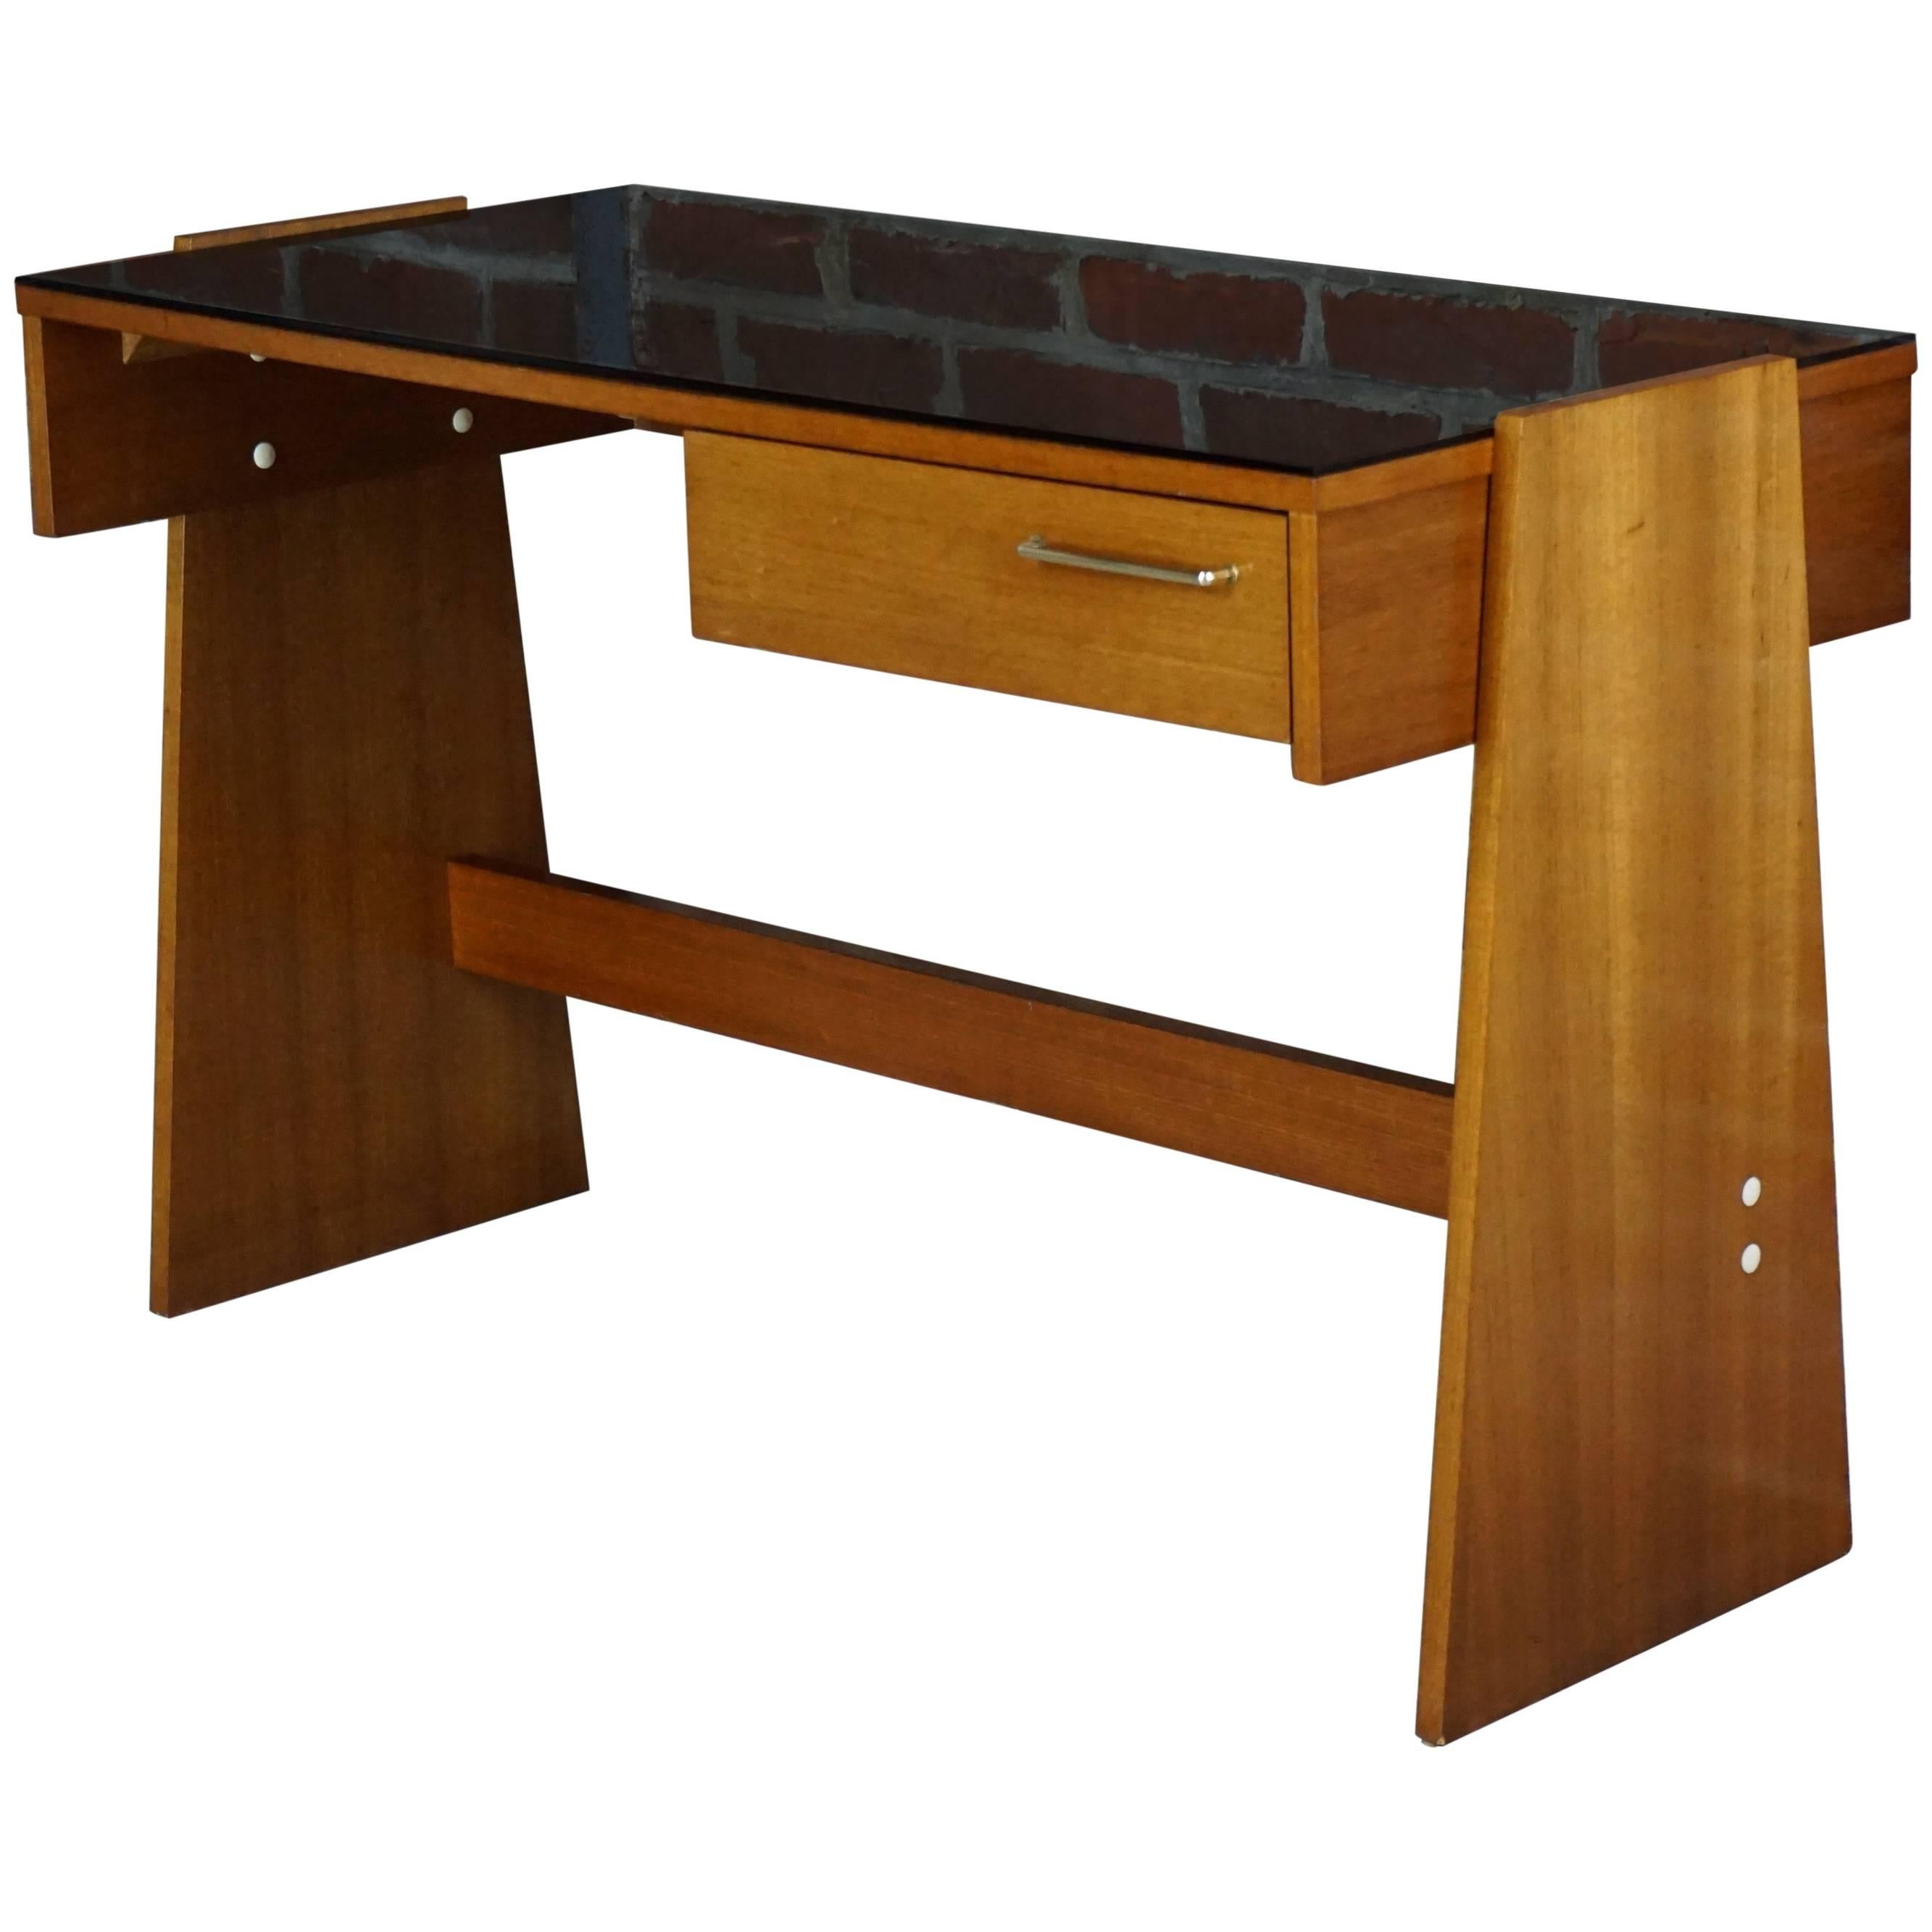 Teak and Black Glass Top Desk Design of the 1960s